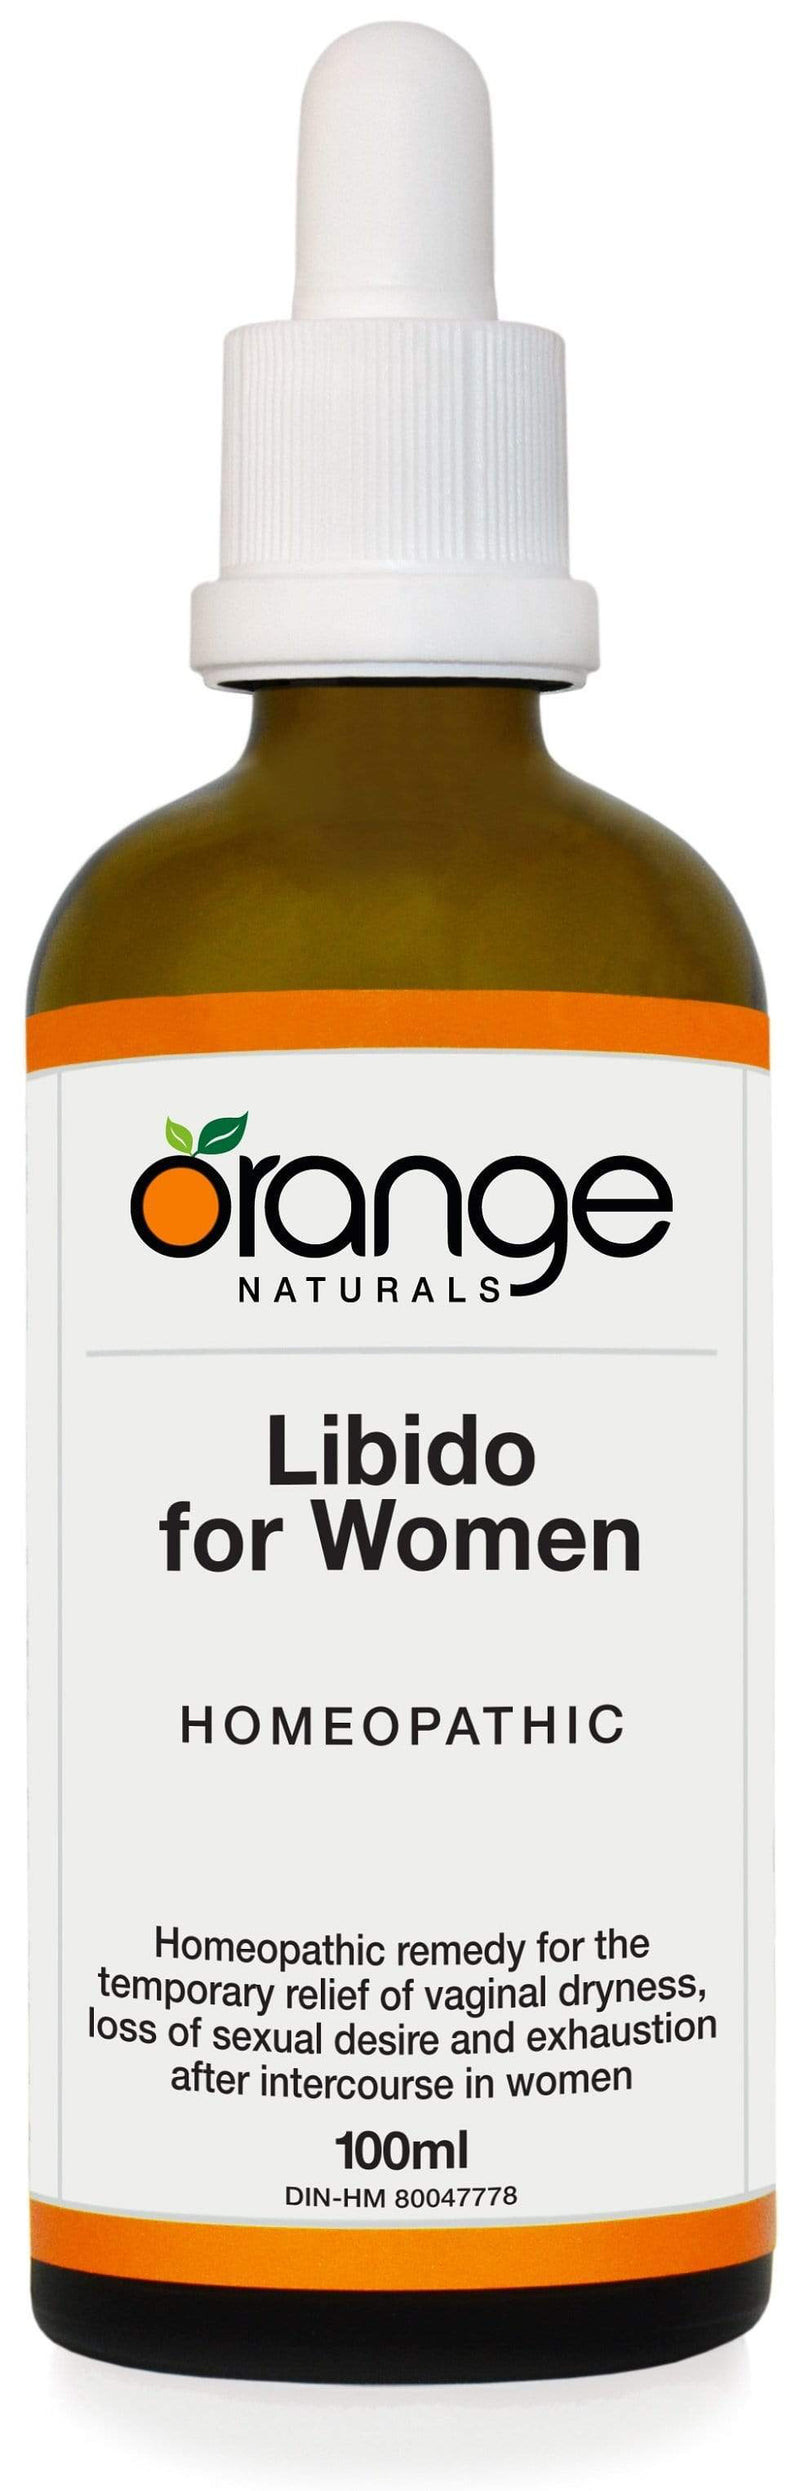 Orange Naturals Homeopathic Libido for Women